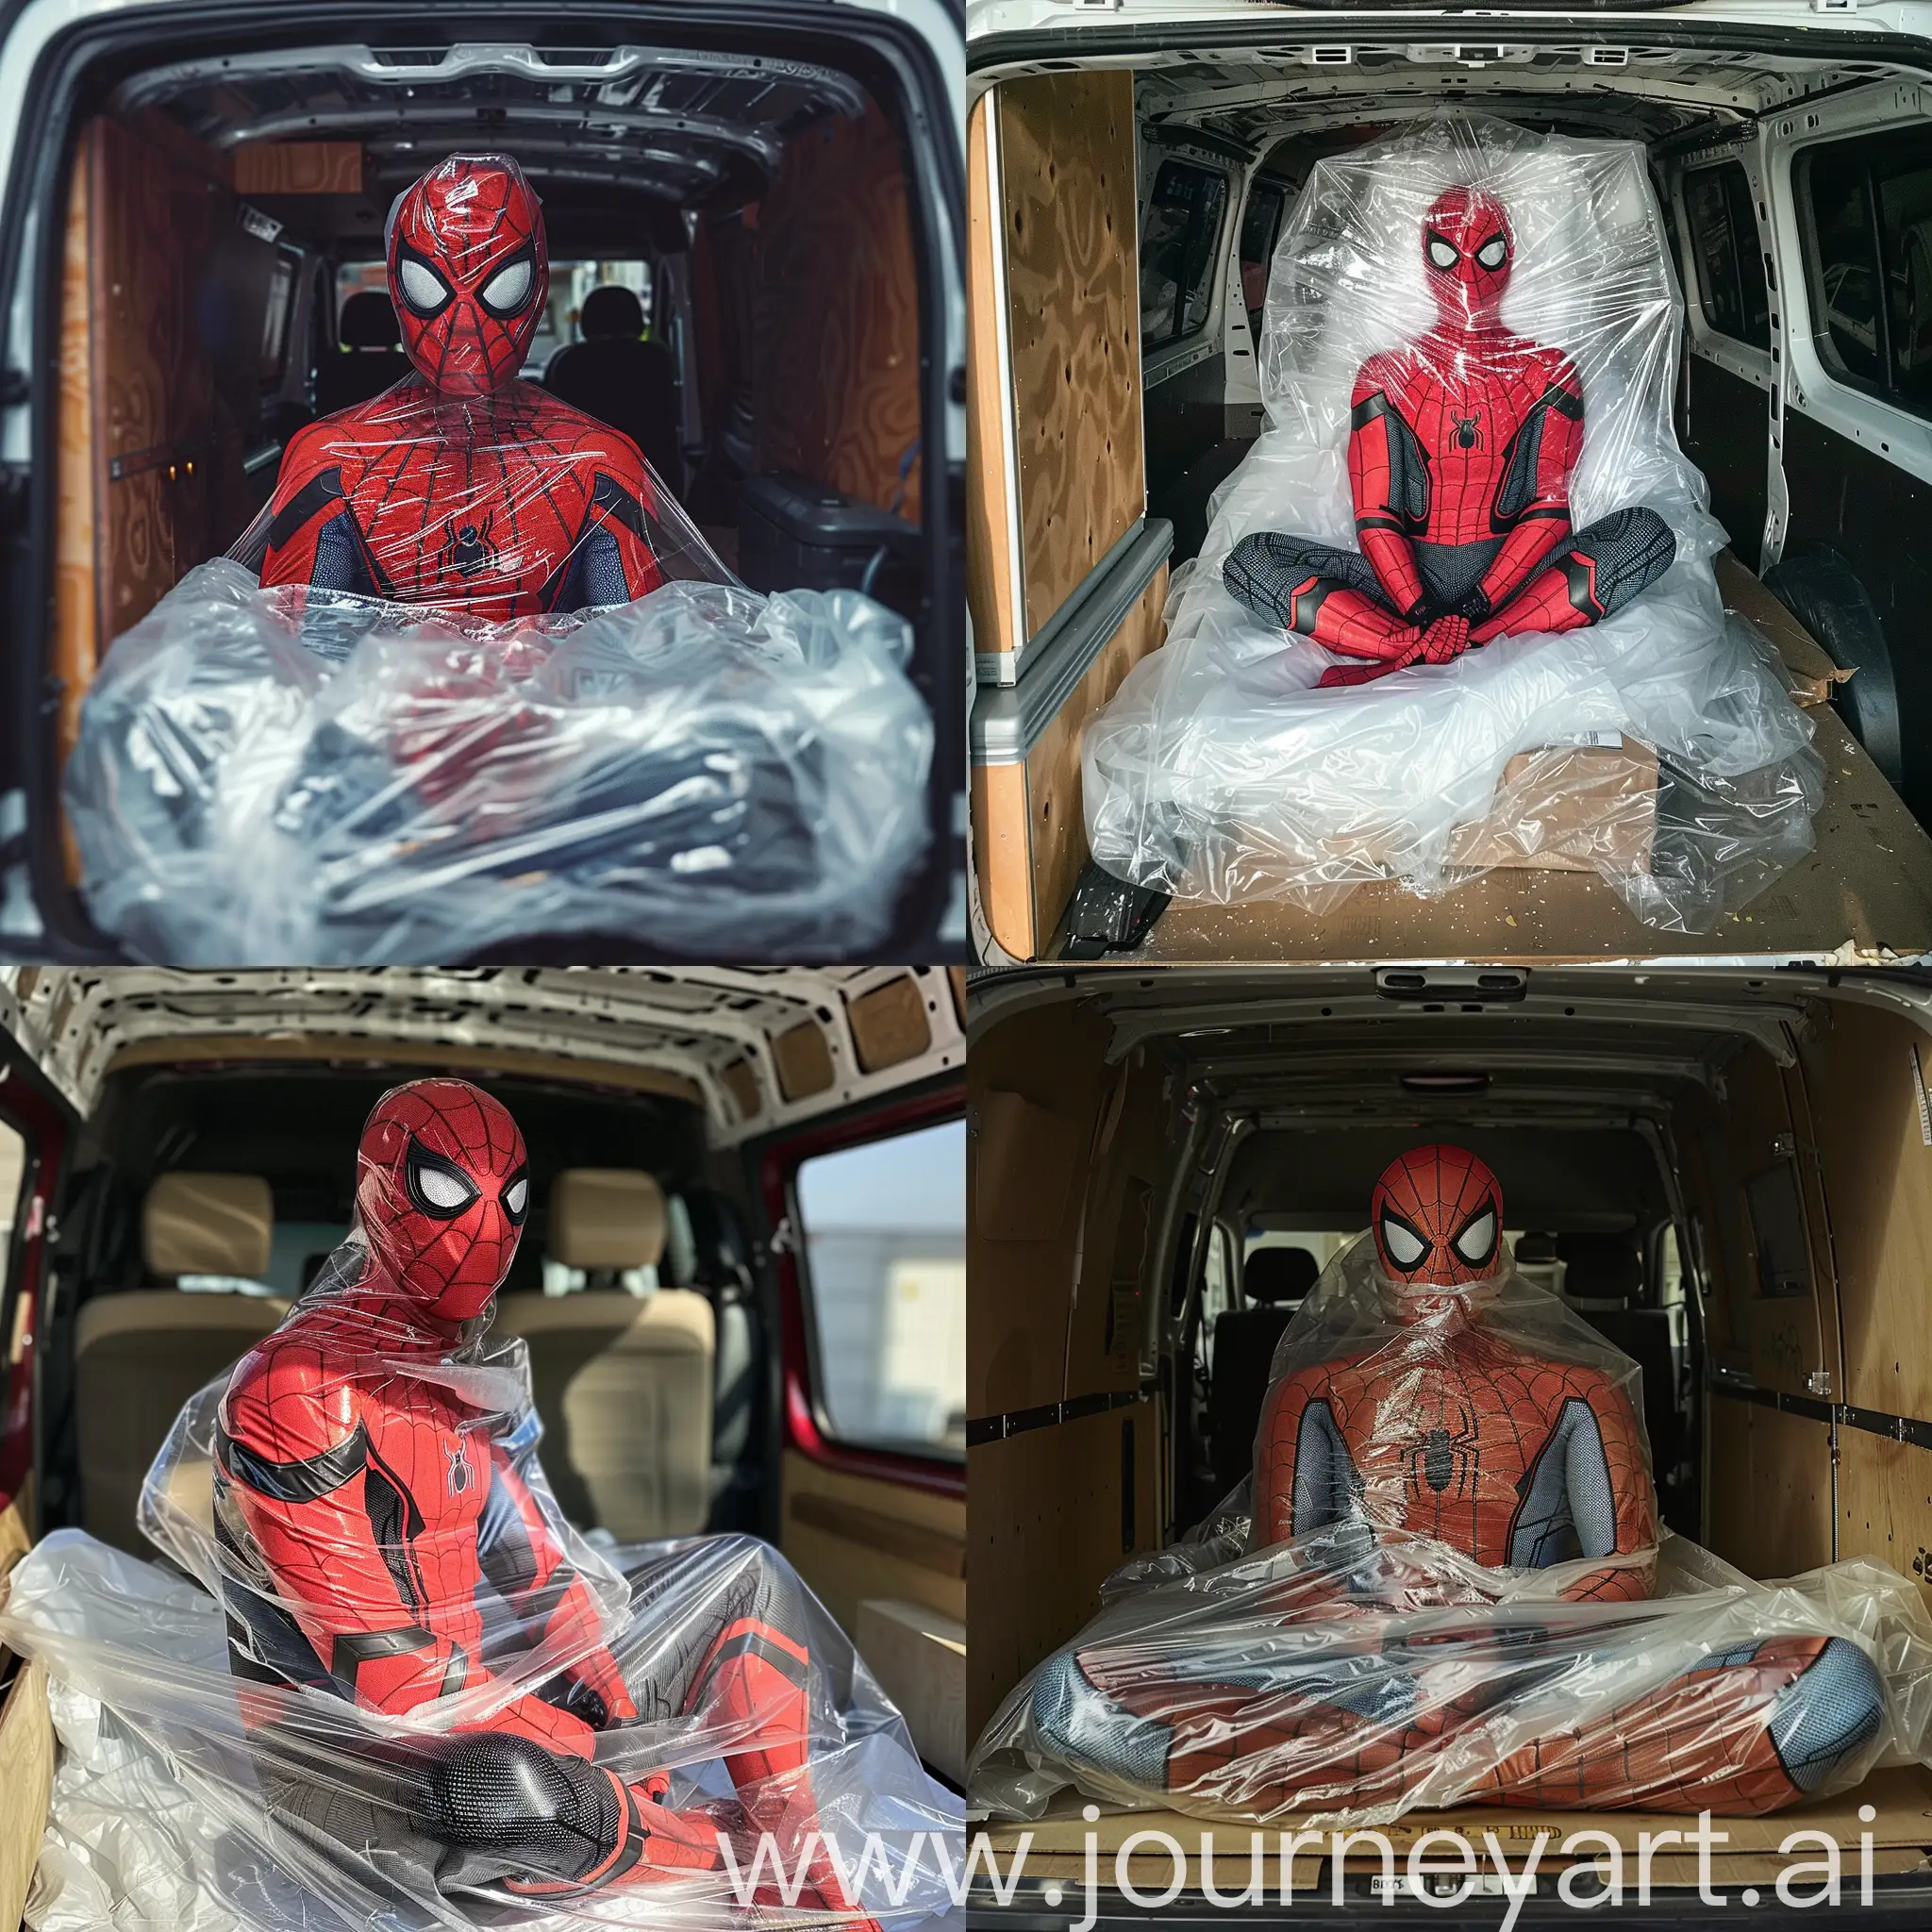 Spiderman-Captured-in-Plastic-Wrap-Inside-a-Van